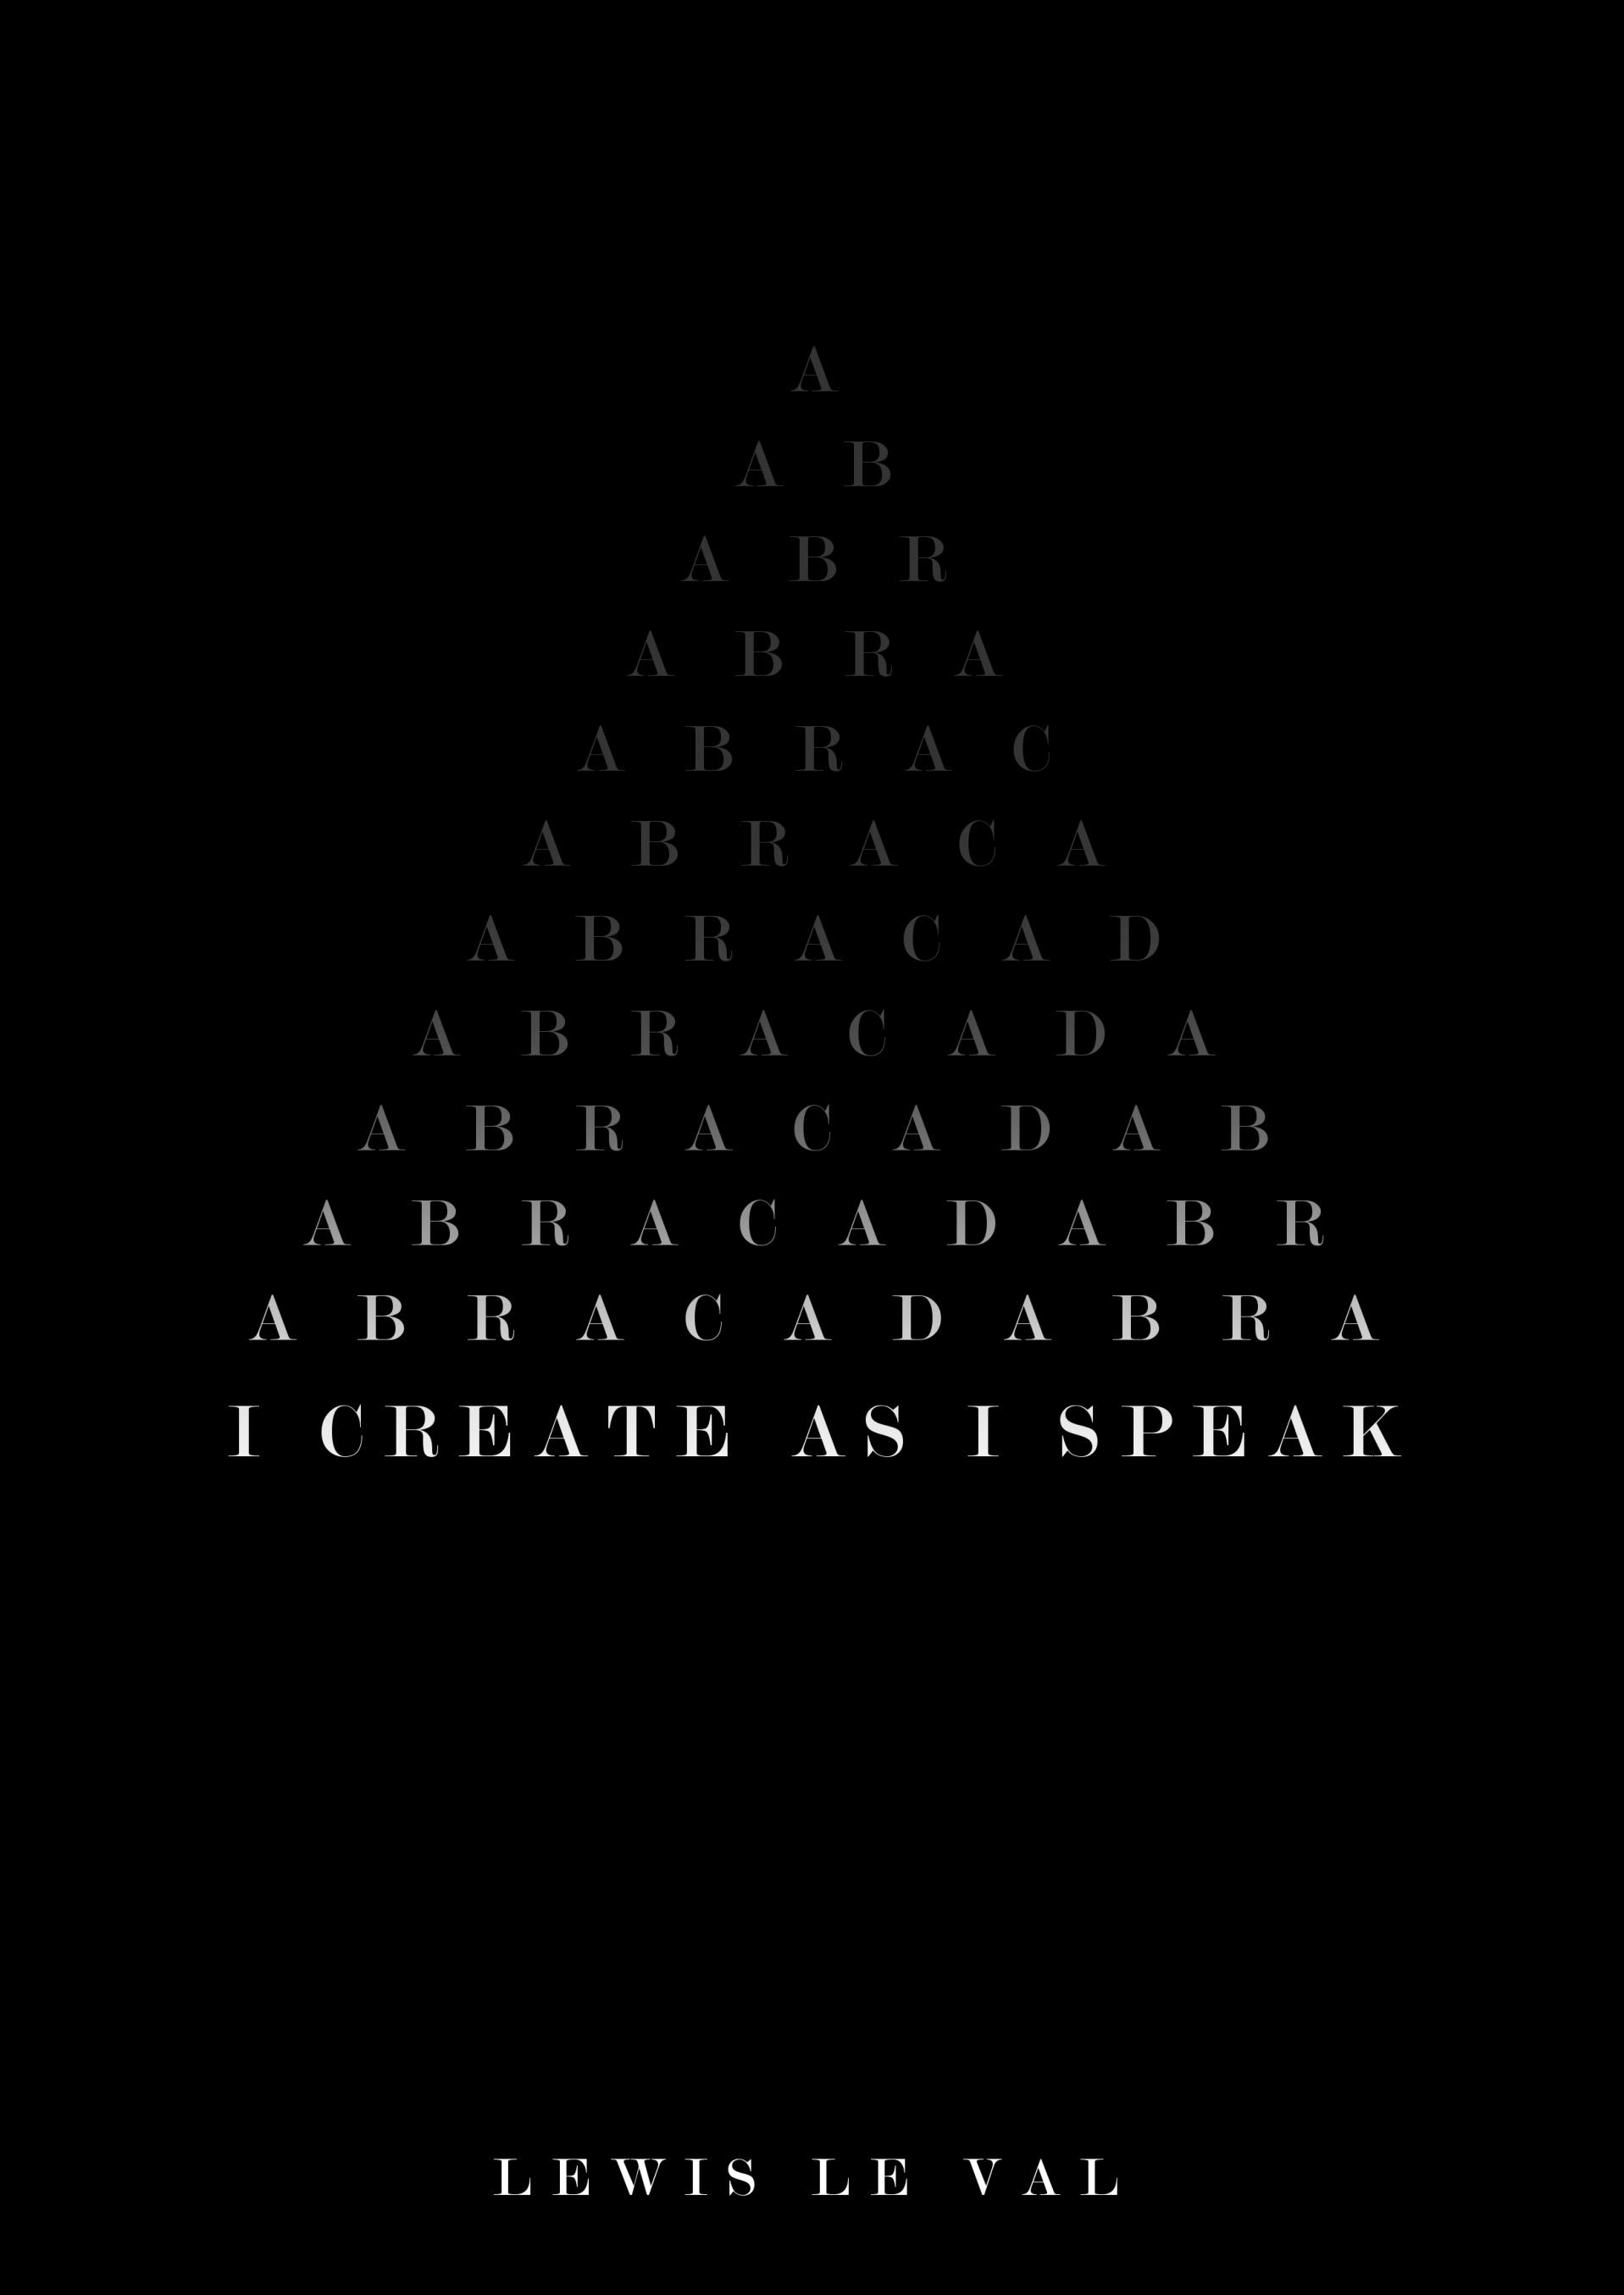 I Create As I Speak (Abracadabra) By Lewis L